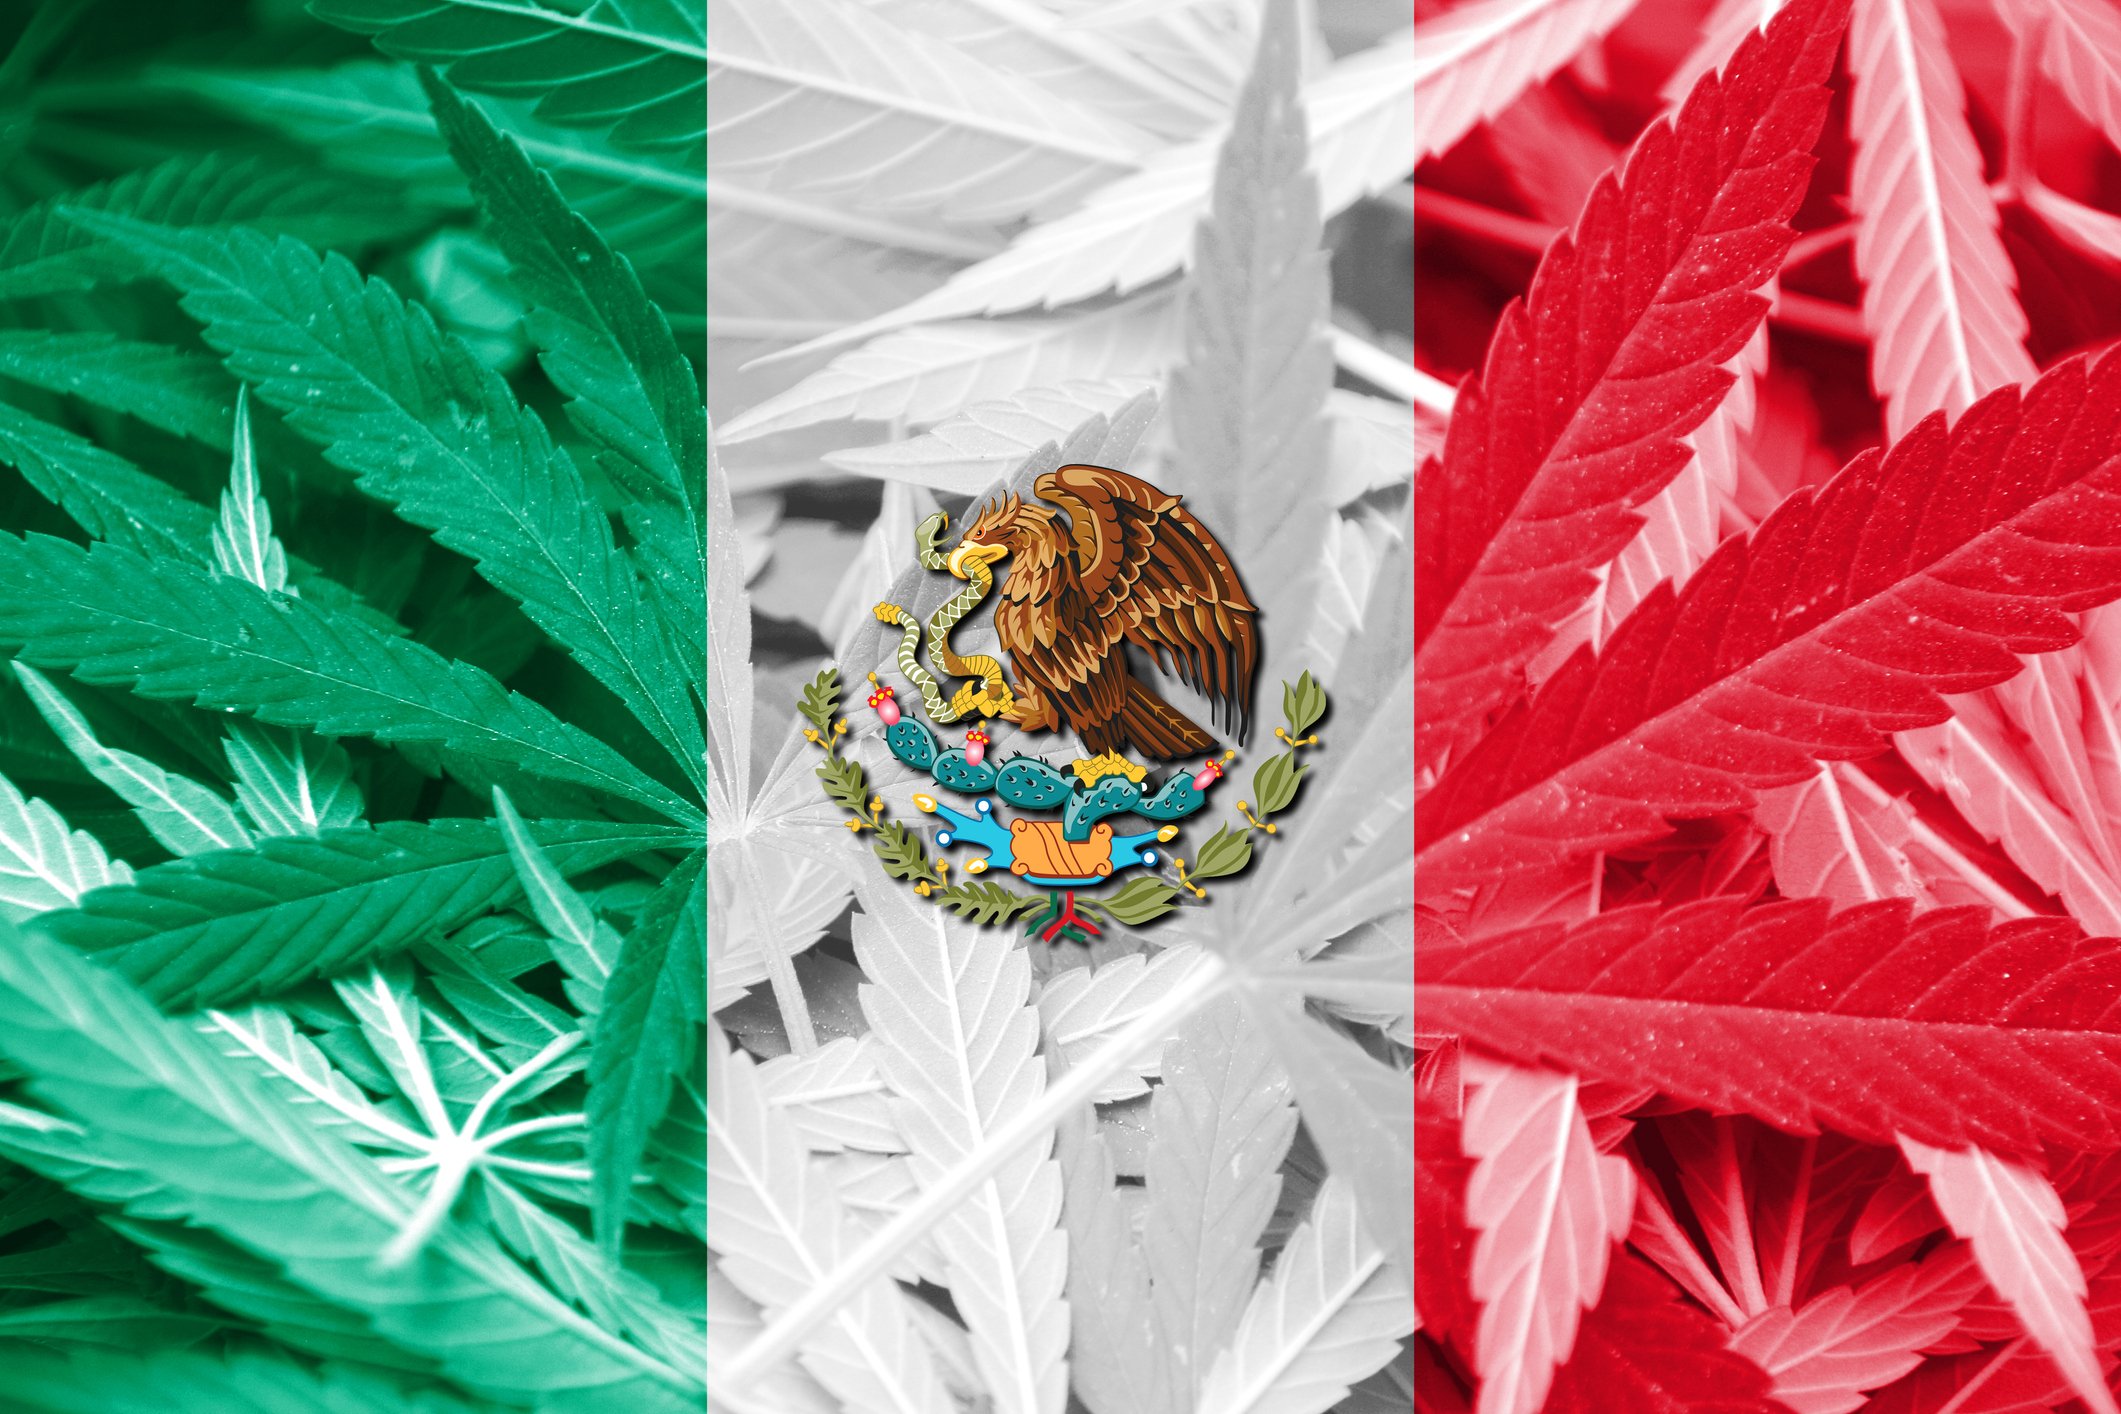 Mexico Aims to Legalize Recreational Marijuana Before October